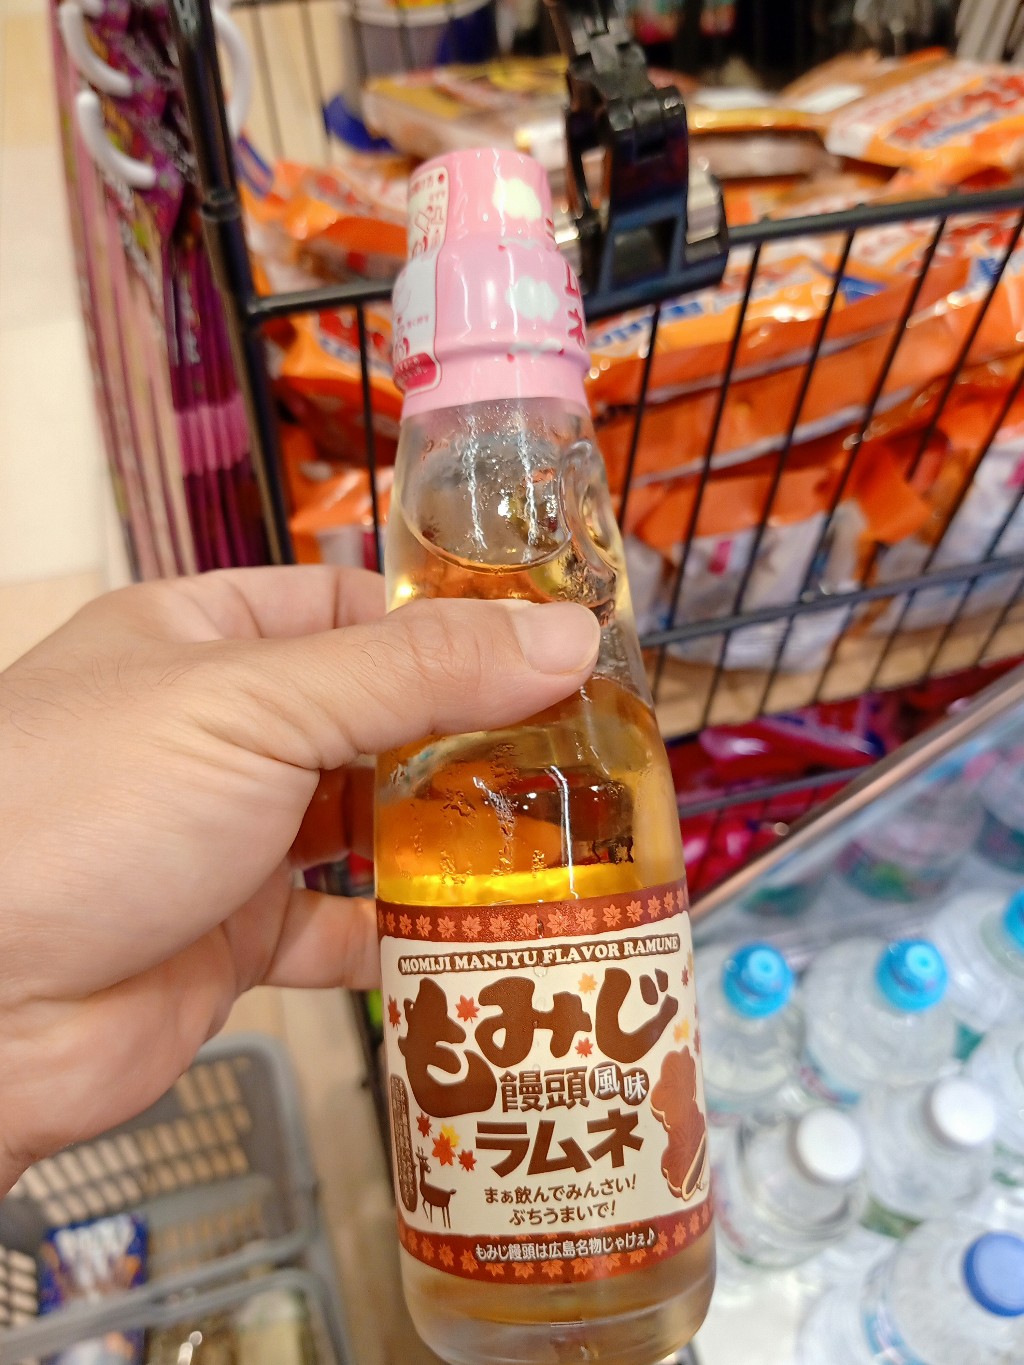 ecook ญี่ปุ่น เครื่องดื่ม ซูซ่า สดชื่น รสขนมถั่วแดง อัดแก๊ส รามูเน่ hisupa dk saito inryo momiji manjyu flavor ramune 200ml